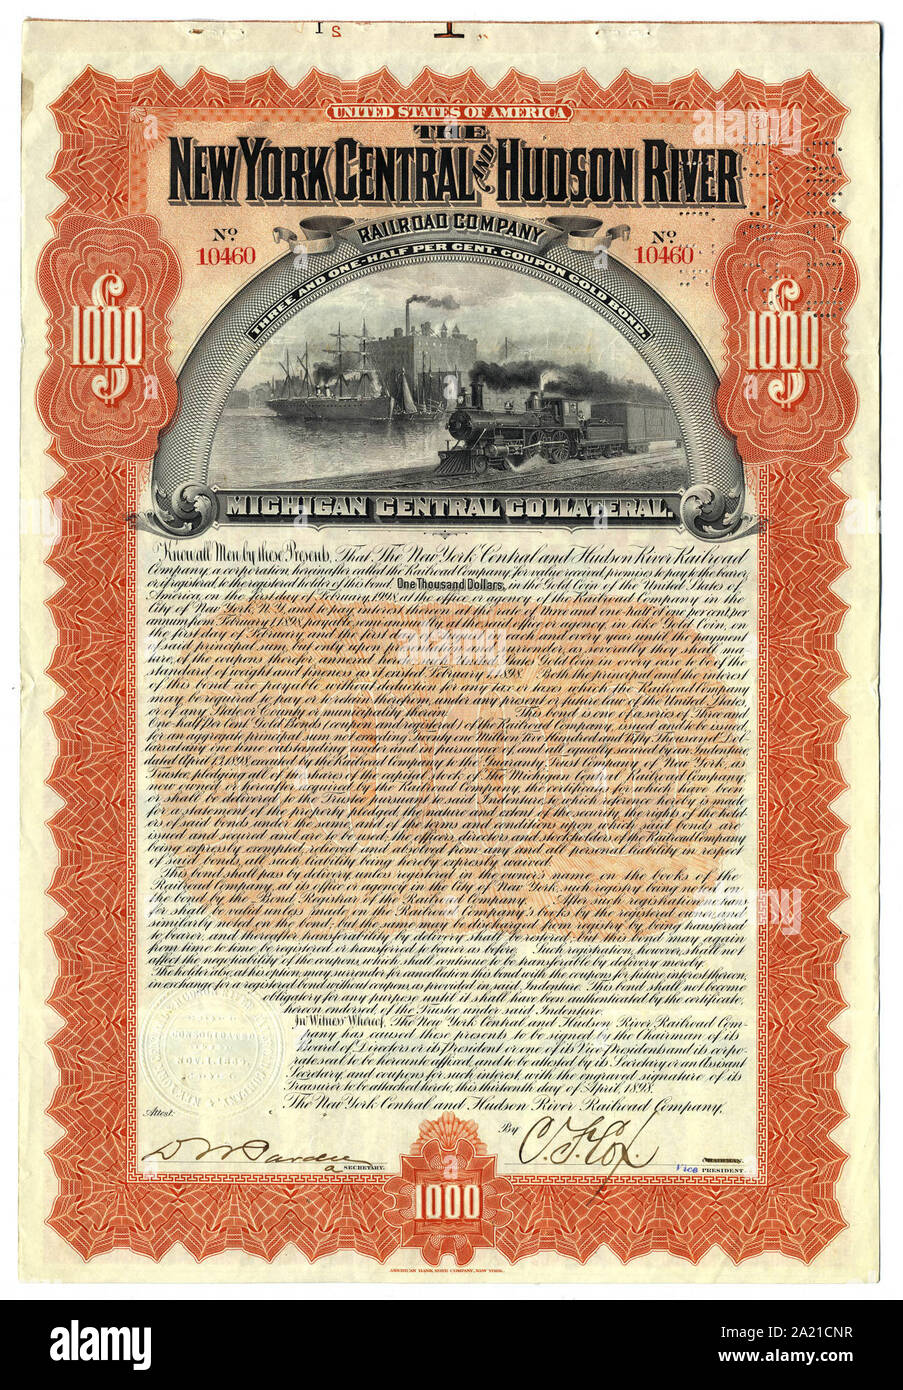 New York Central & Hudson River Railroad Bond Stock Certificate Michigan 